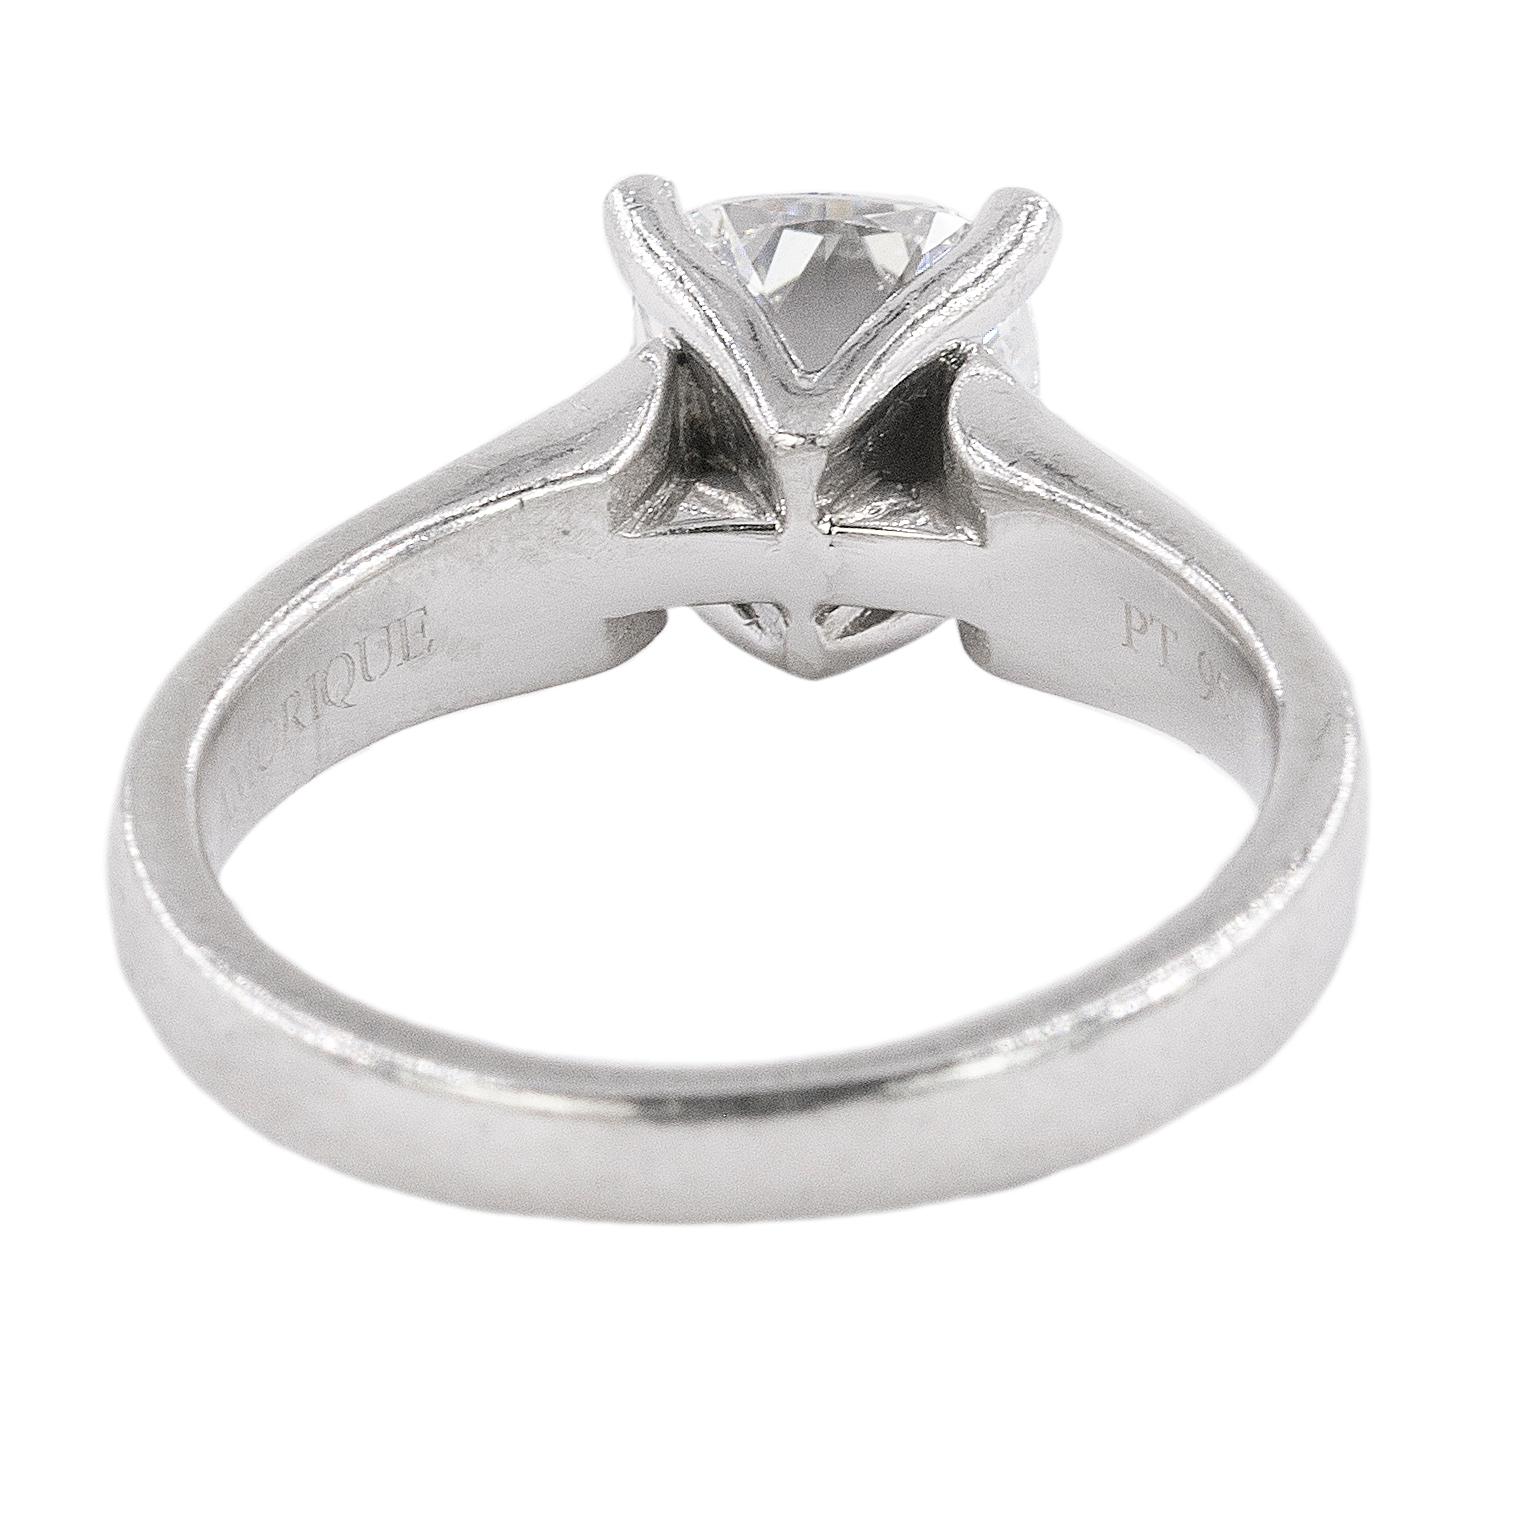 Women's or Men's Platinum Ring with E Color VVS1 Clarity Cushion Cut Diamond